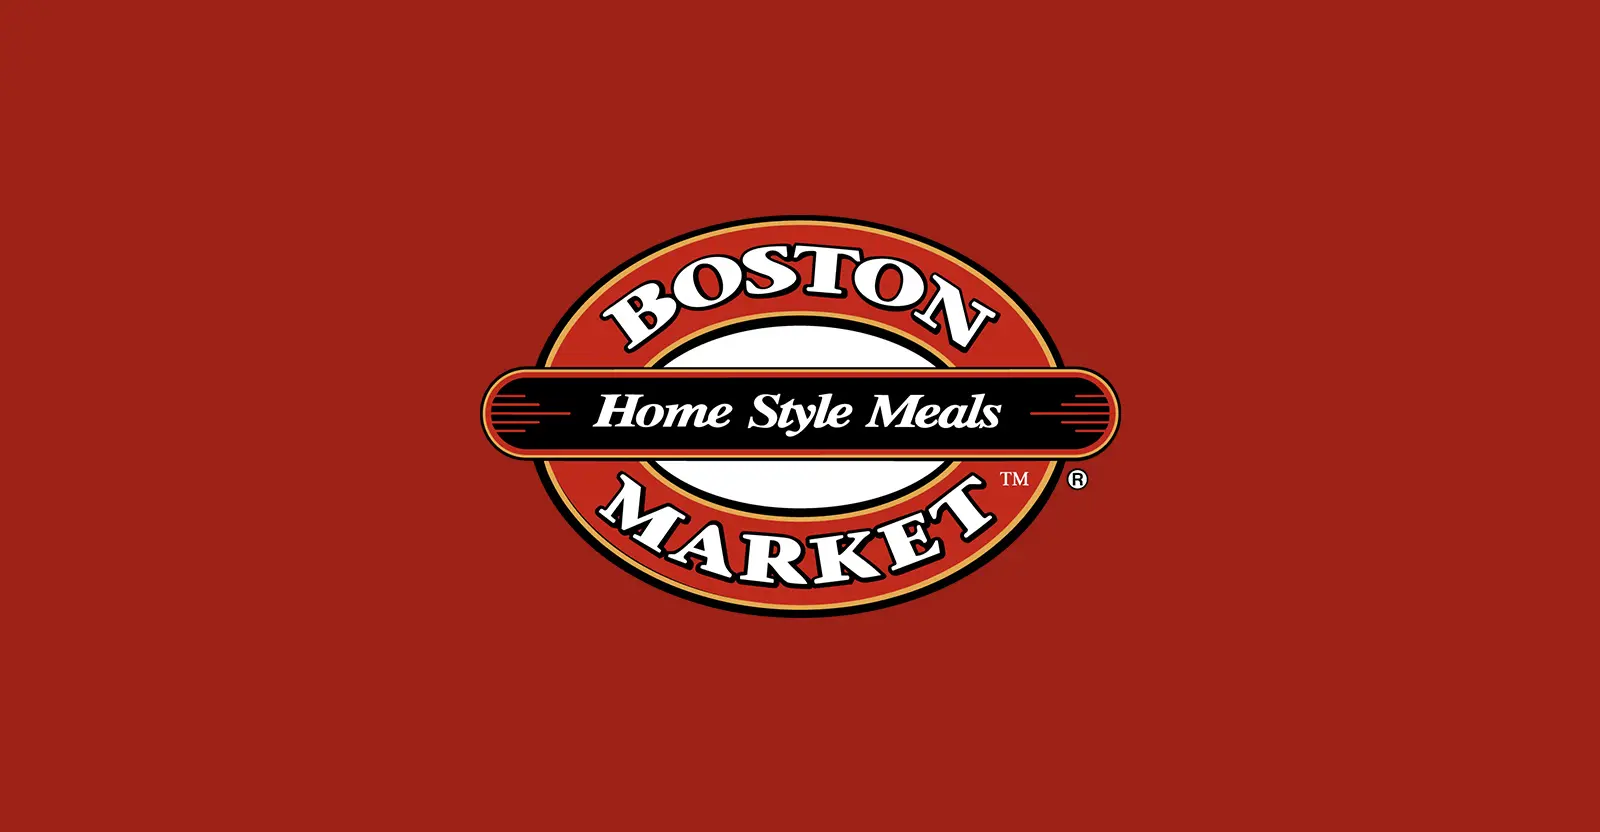 boston market gluten-free menu